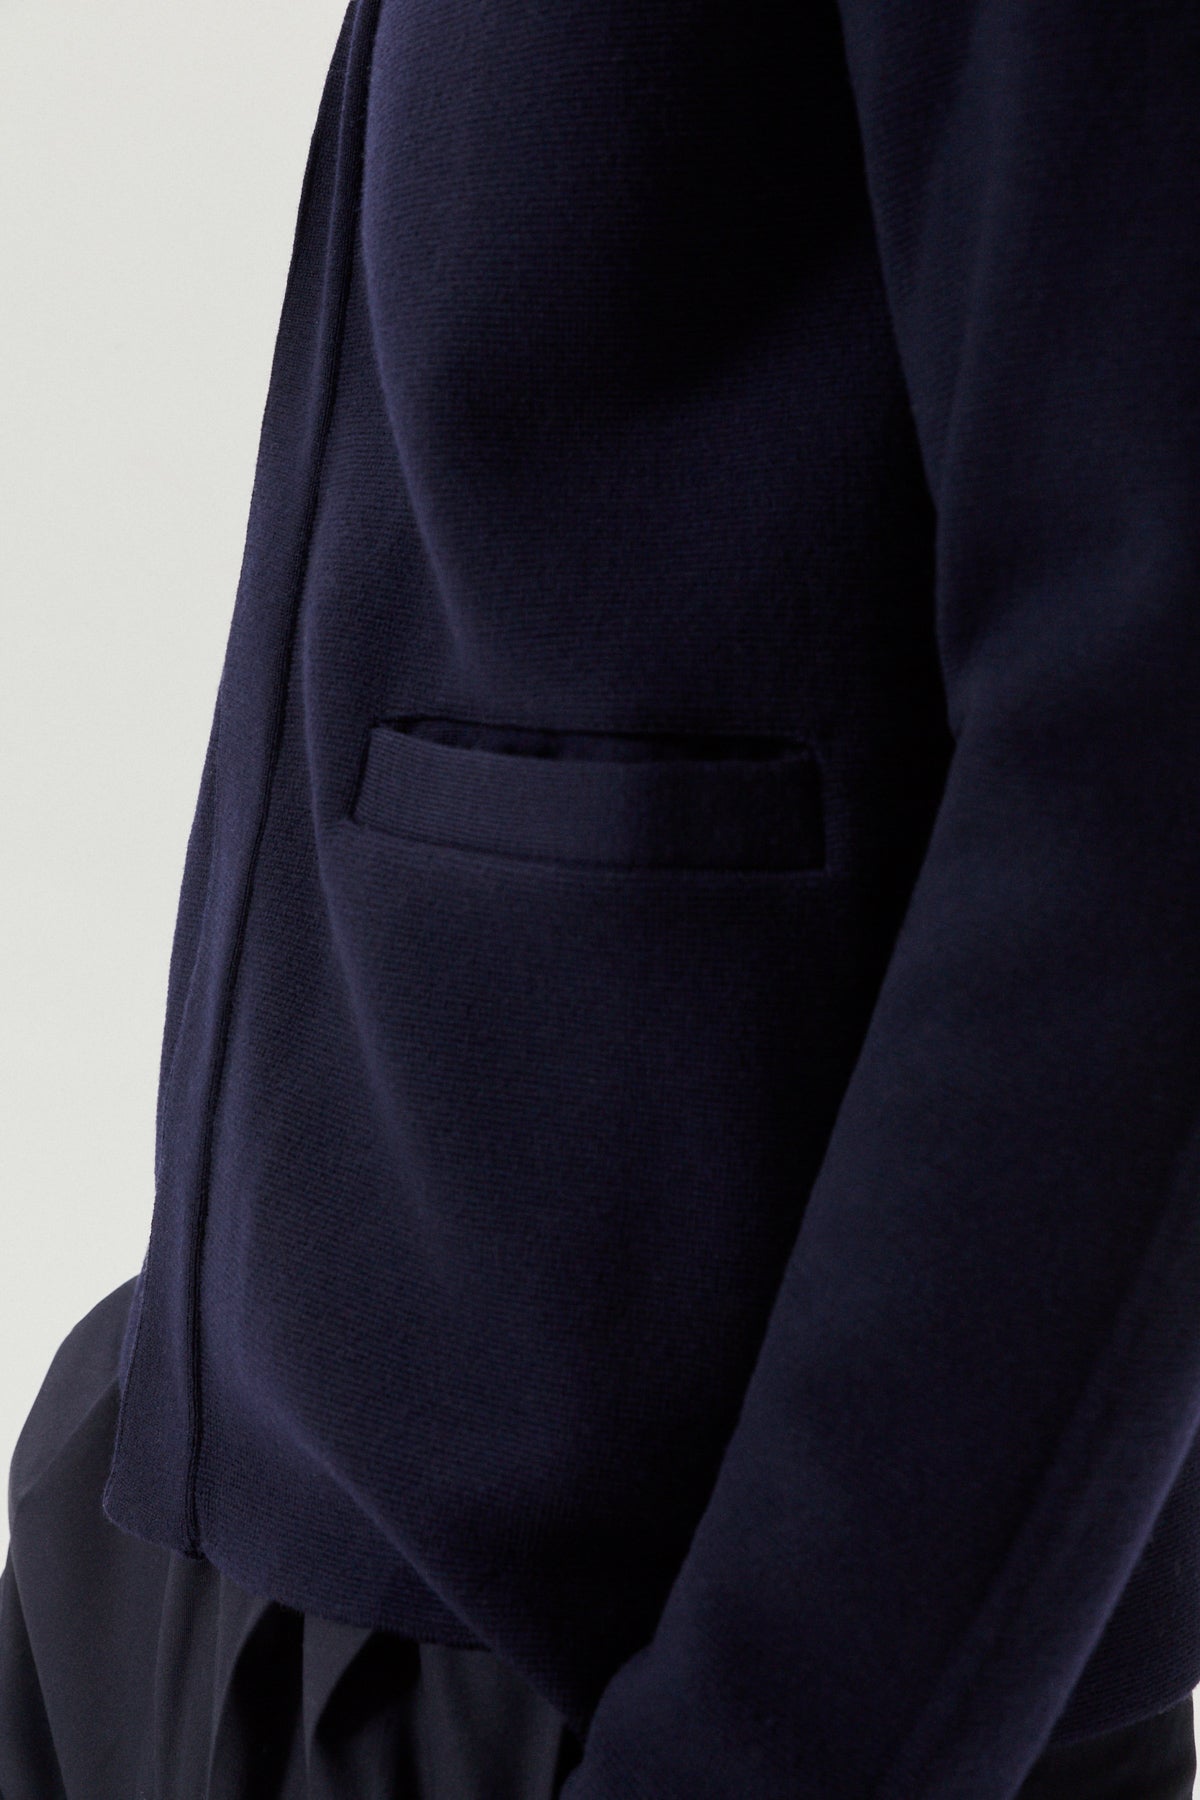 Oxford Blue | The Merino Wool Cardigan